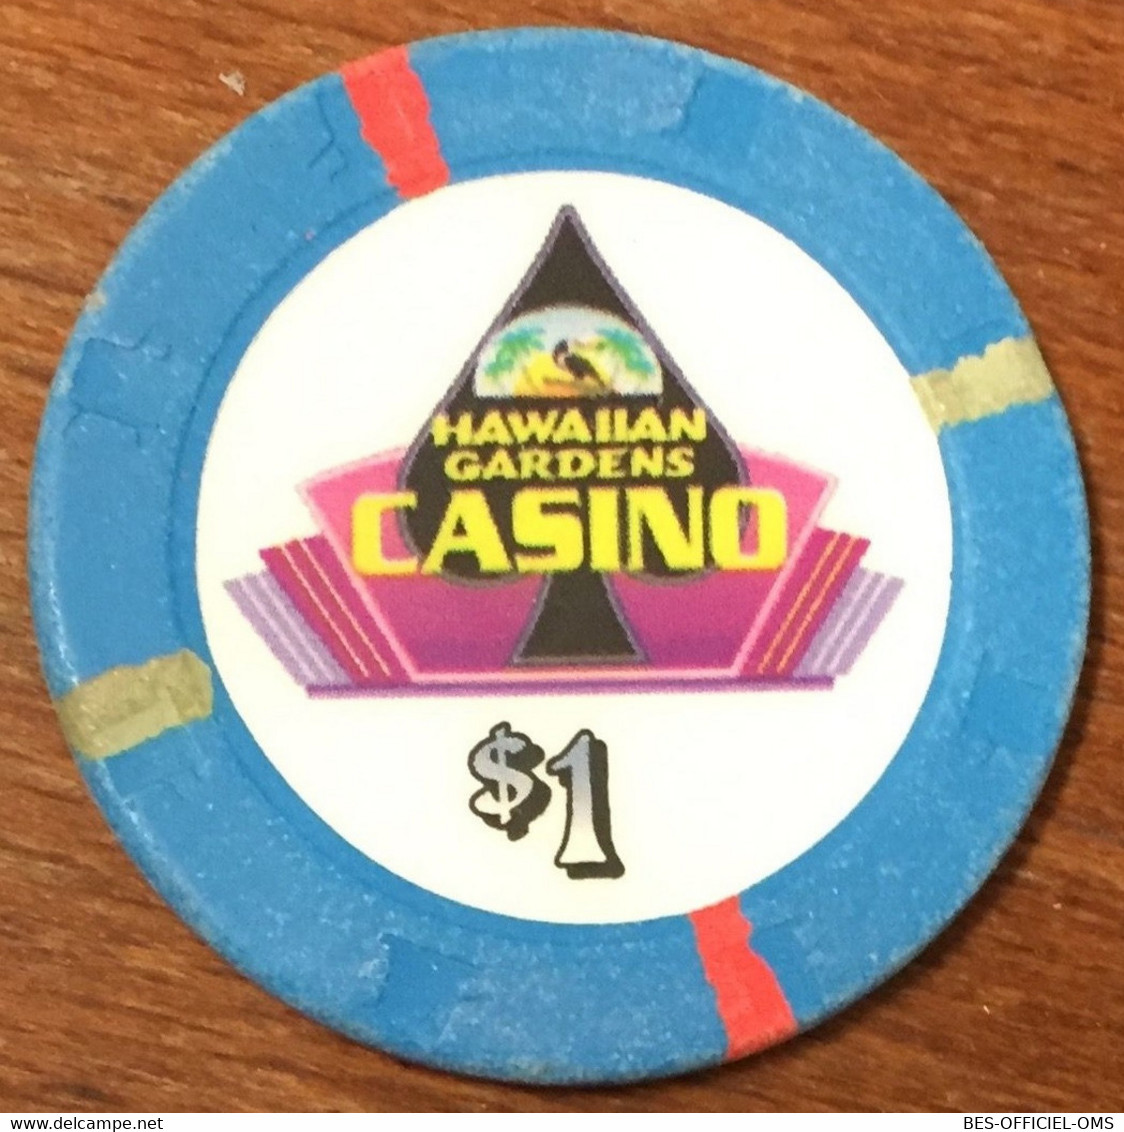 ÉTATS-UNIS USA CALIFORNIE HAWAIIAN GARDENS CASINO CHIP $ 1 JETON TOKENS COINS GAMING - Casino